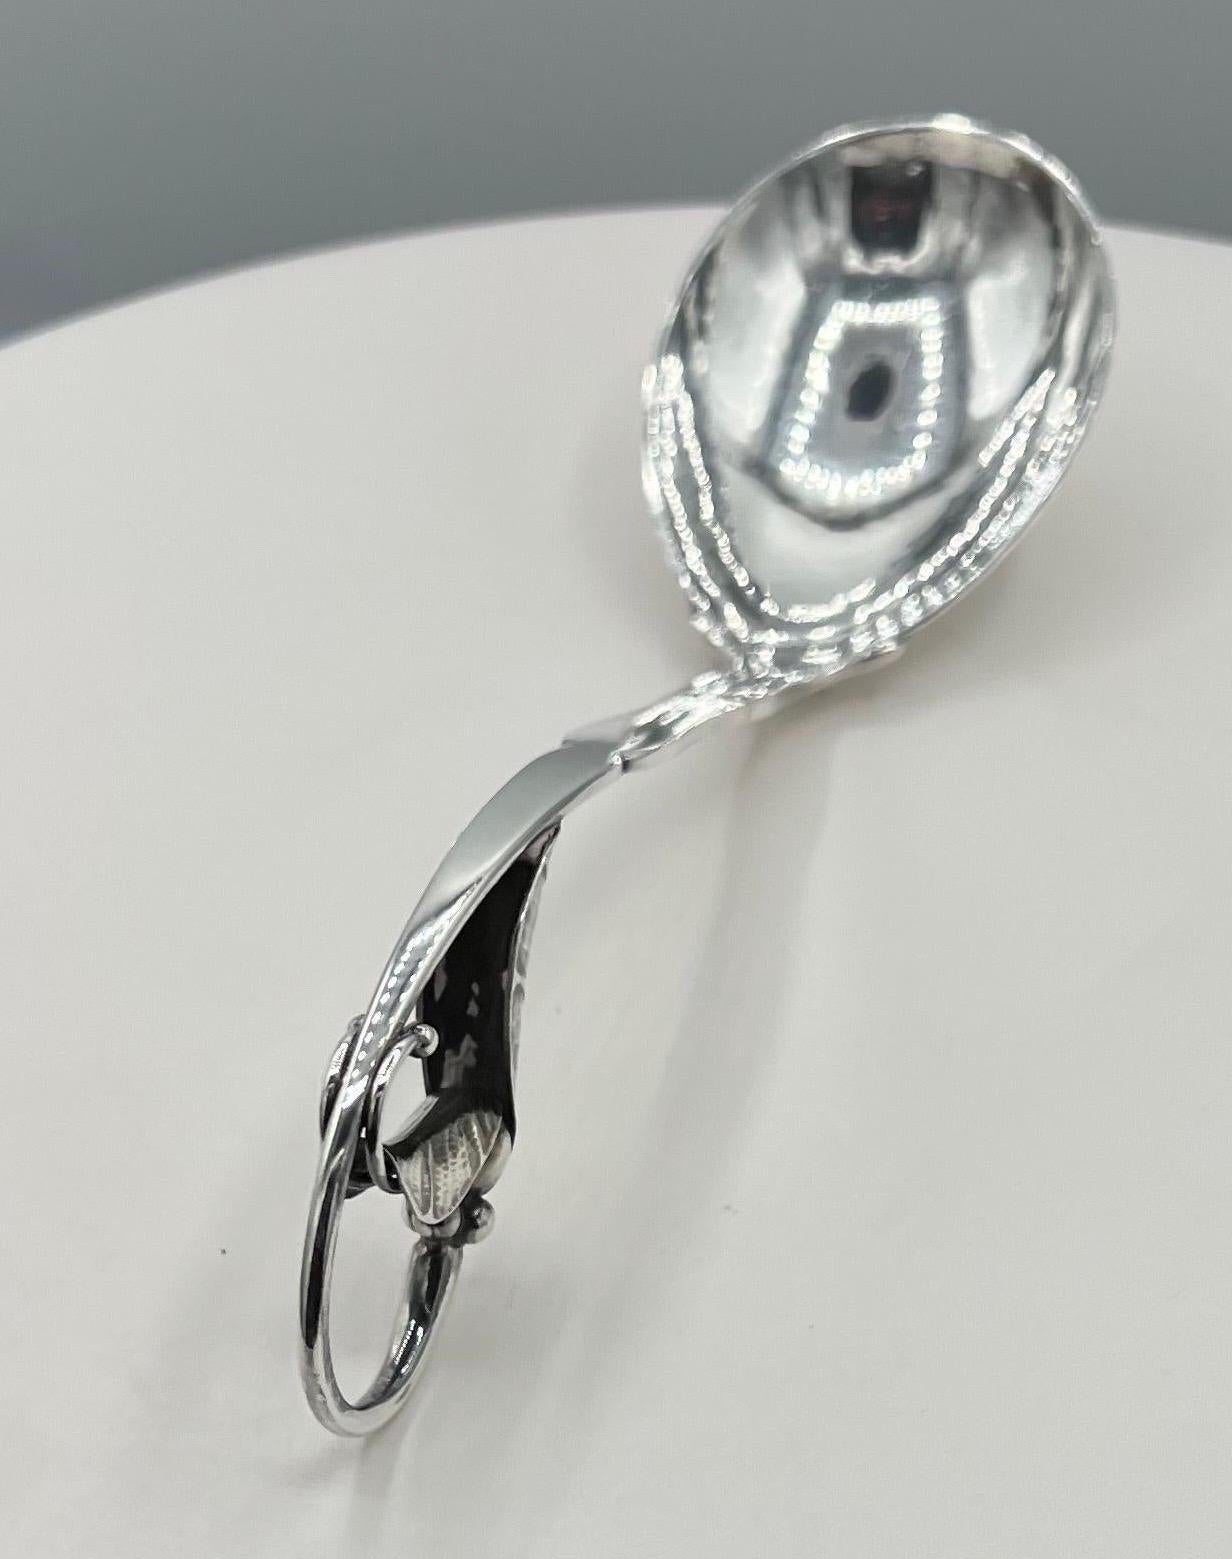 20th Century Georg Jensen Sterling Silver Ornamental Serving Spoon #141 For Sale